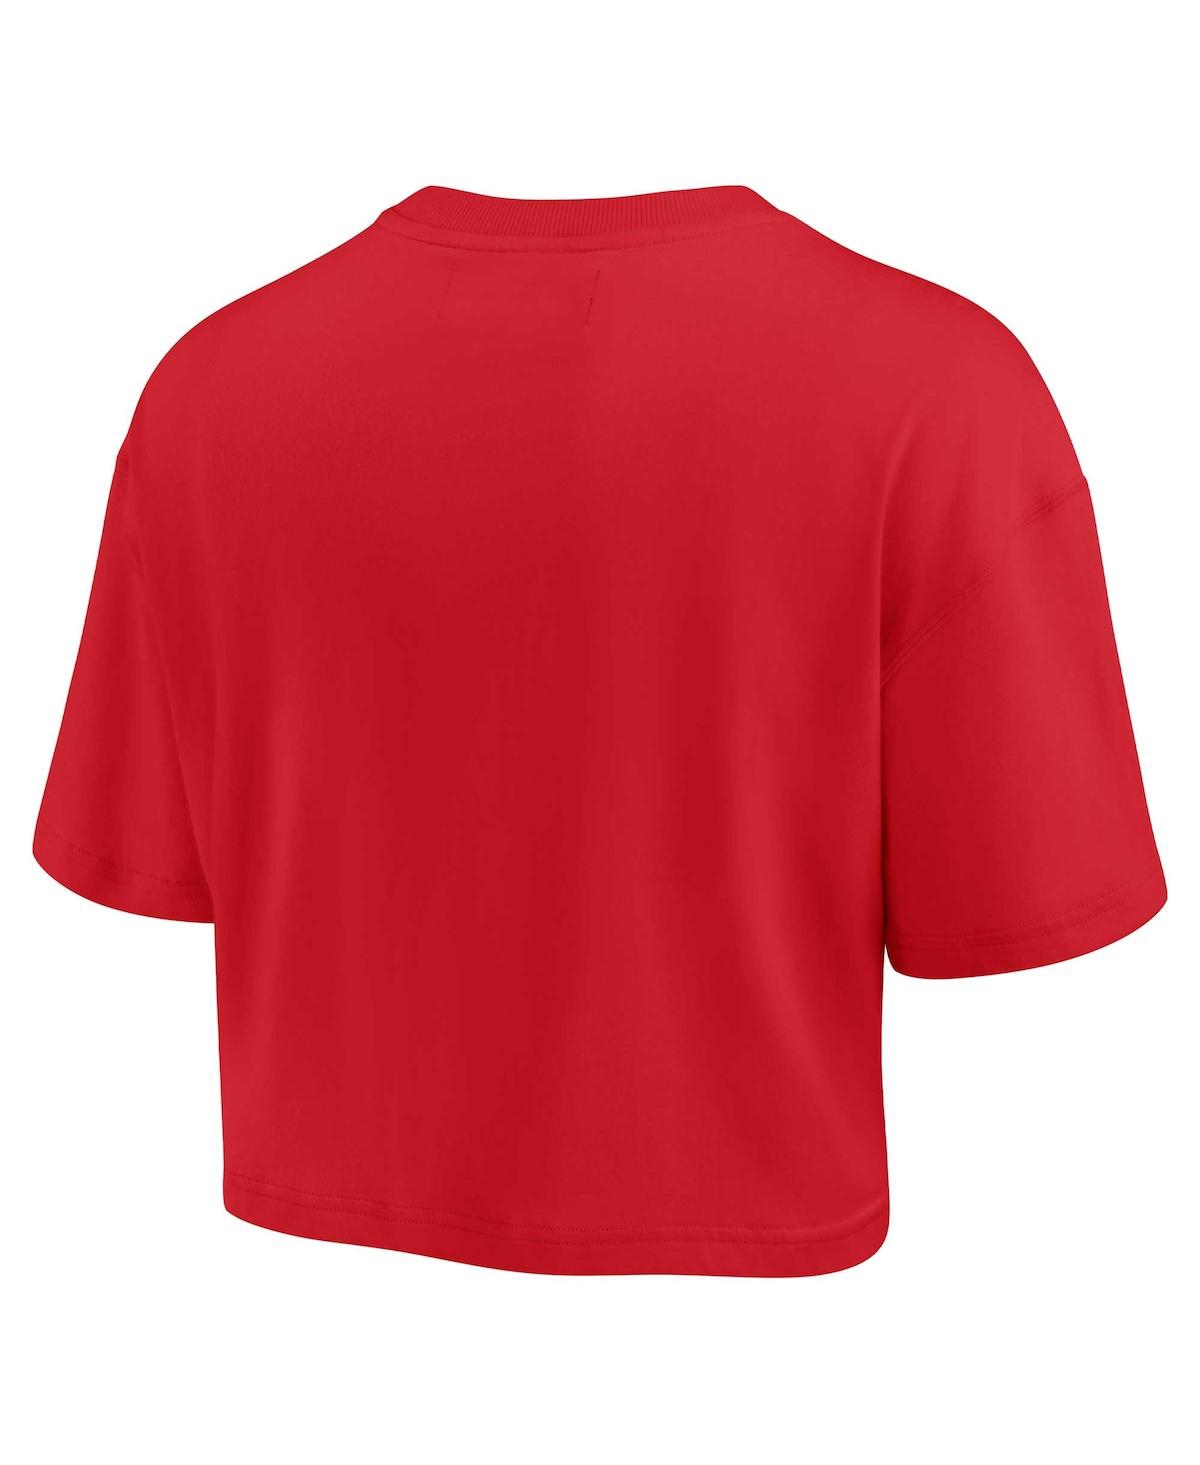 Shop Fanatics Signature Women's  Red Georgia Bulldogs Super Soft Boxy Cropped T-shirt